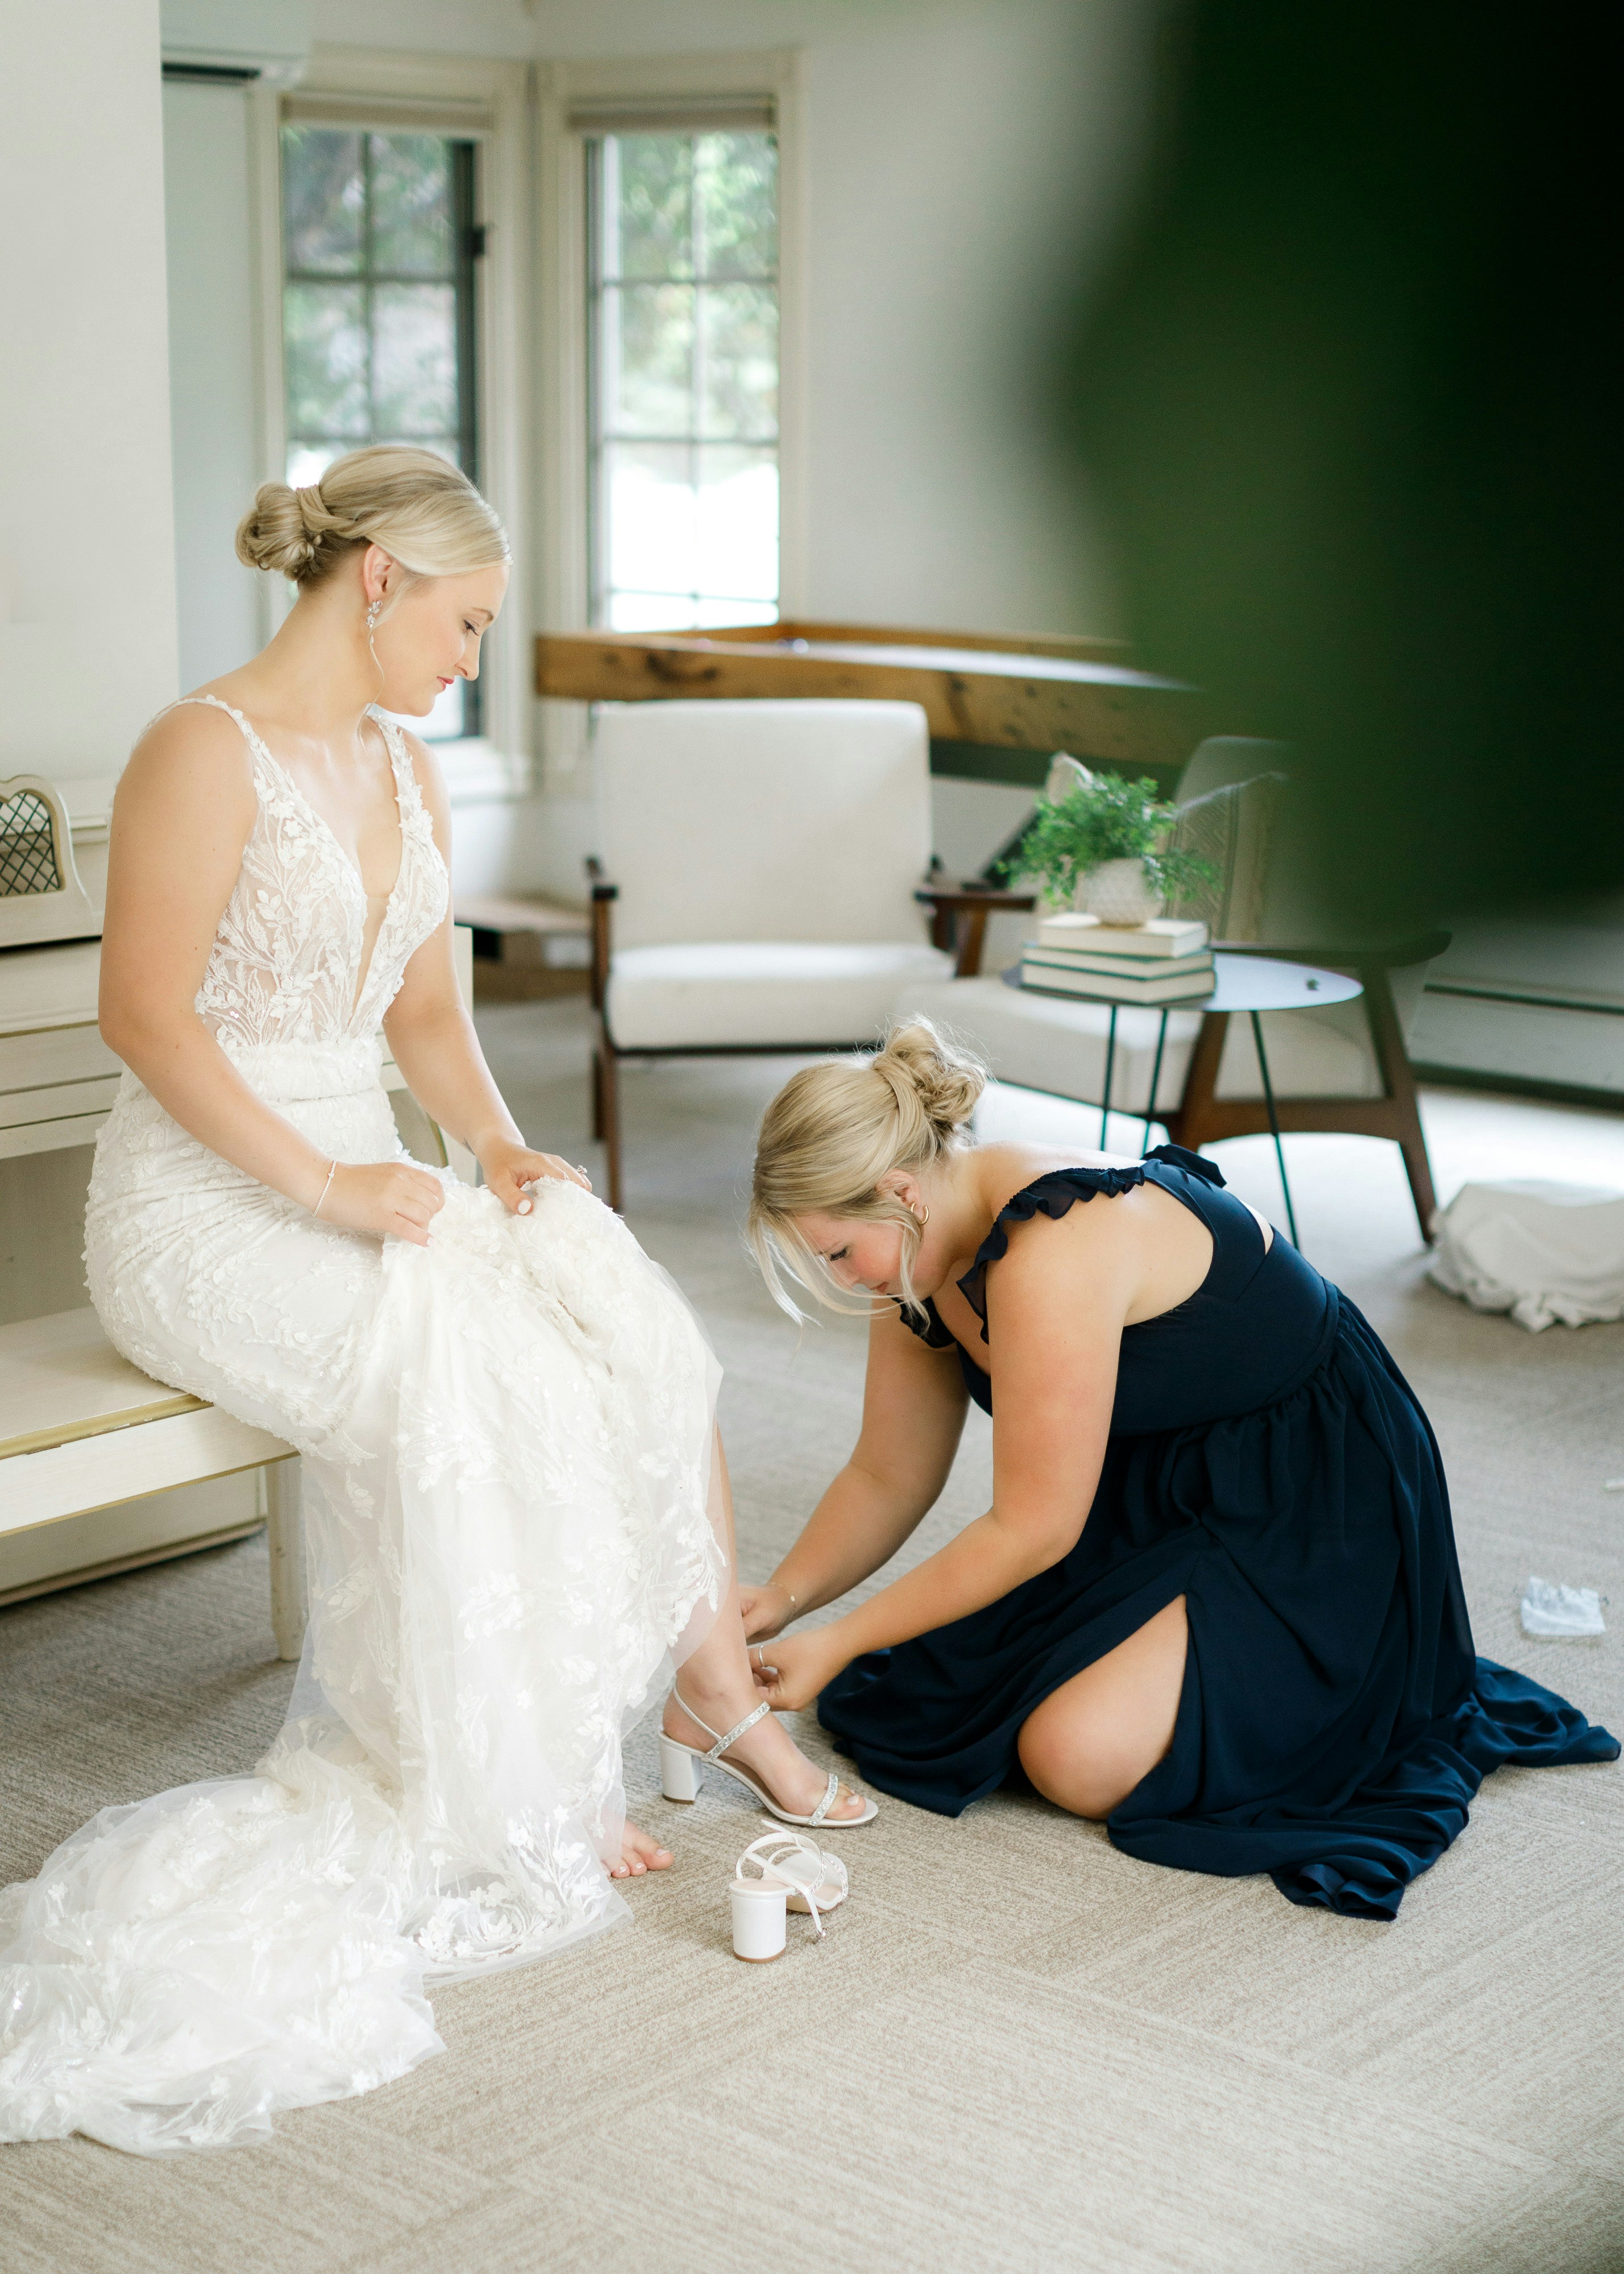 A bridesmaid helping the bride | Source: Unsplash